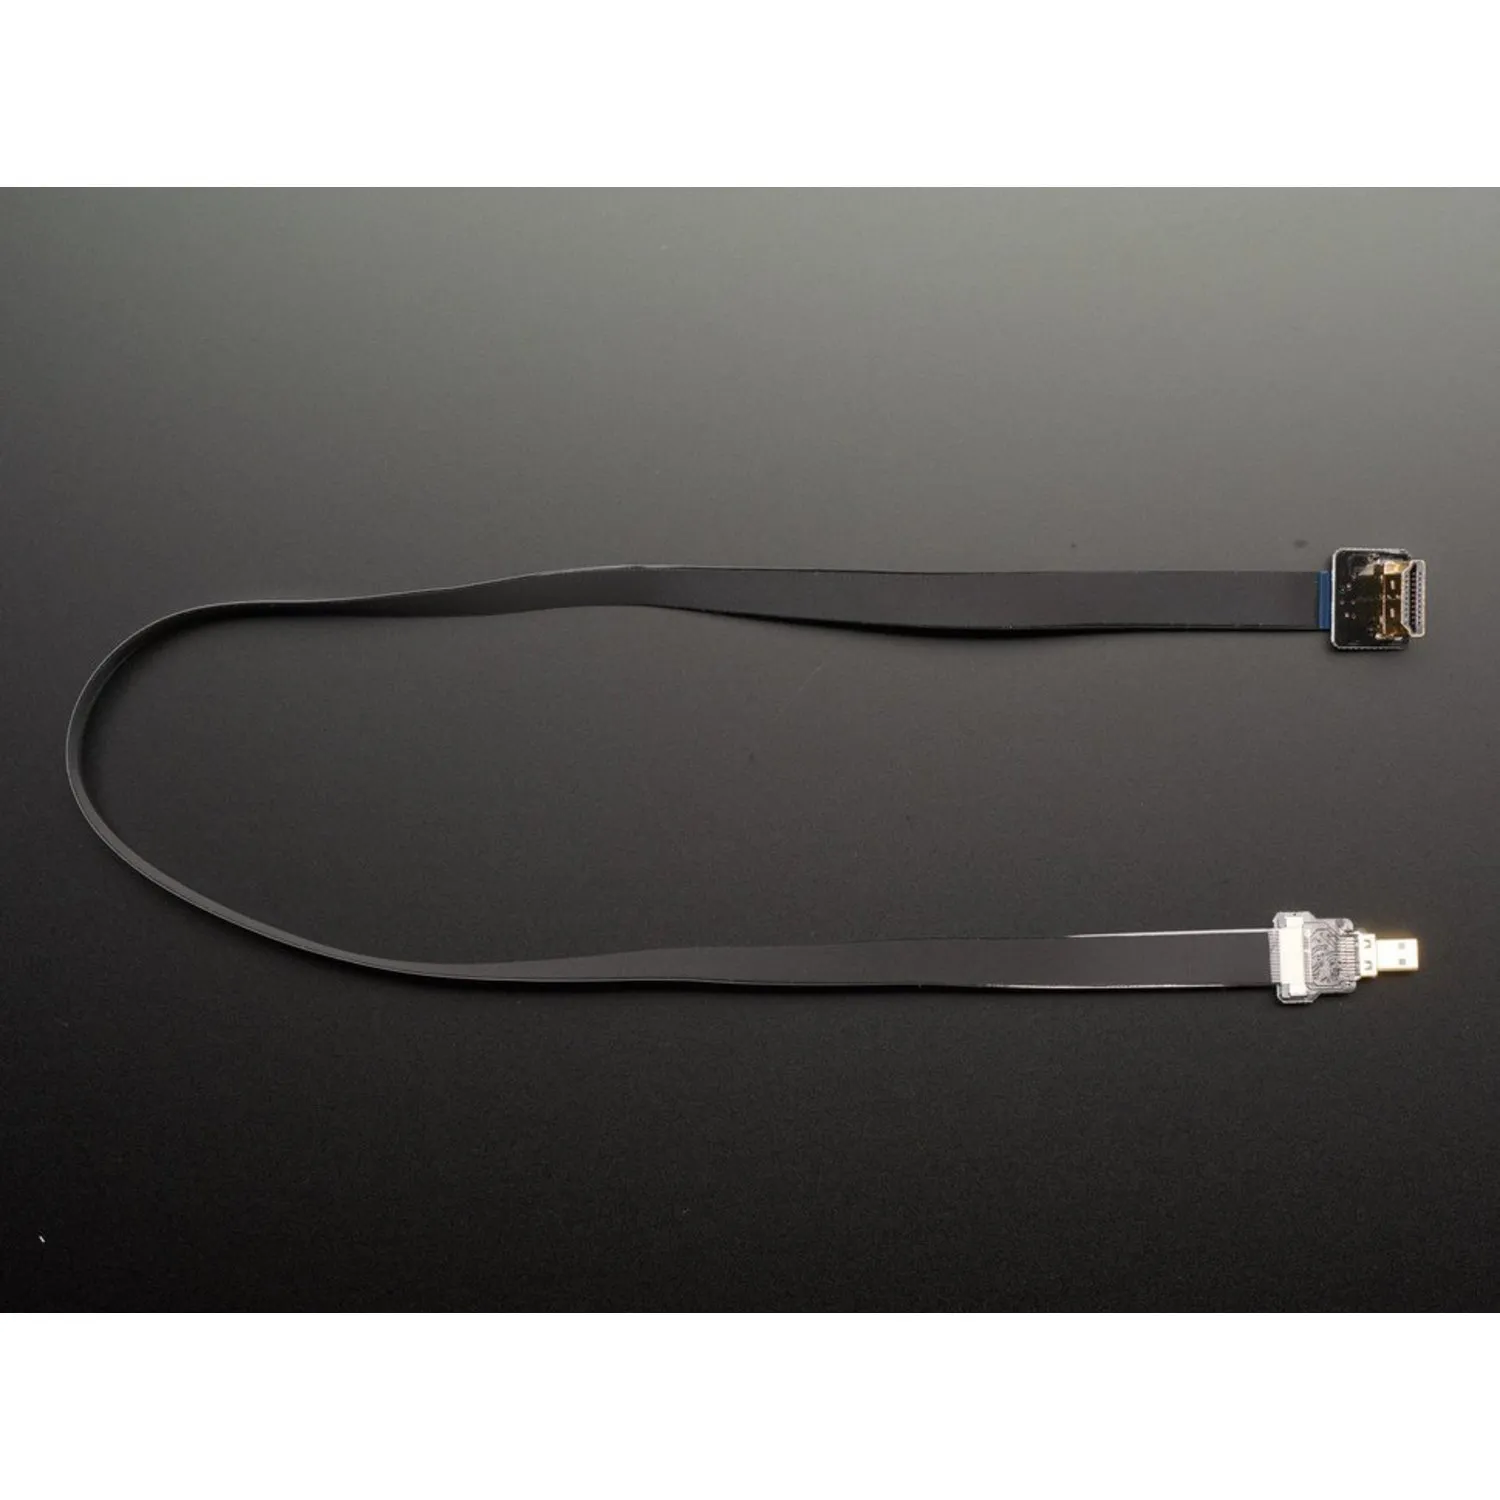 Photo of DIY HDMI Cable Parts - Straight Micro HDMI Plug Adapter